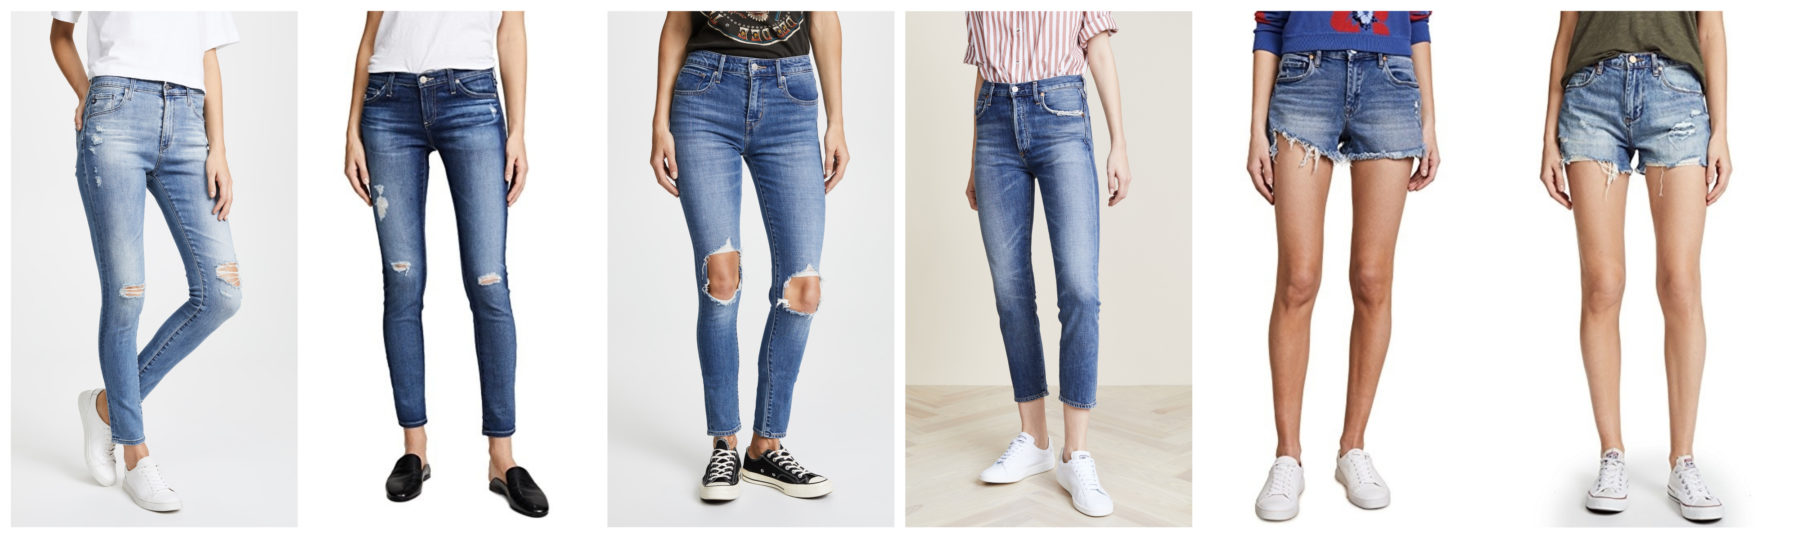 shopbop buy more save more 2018 sale picks | jeans to buy - Shopbop Sale: Buy More Save More by popular Dallas petite fashion blogger cute & little